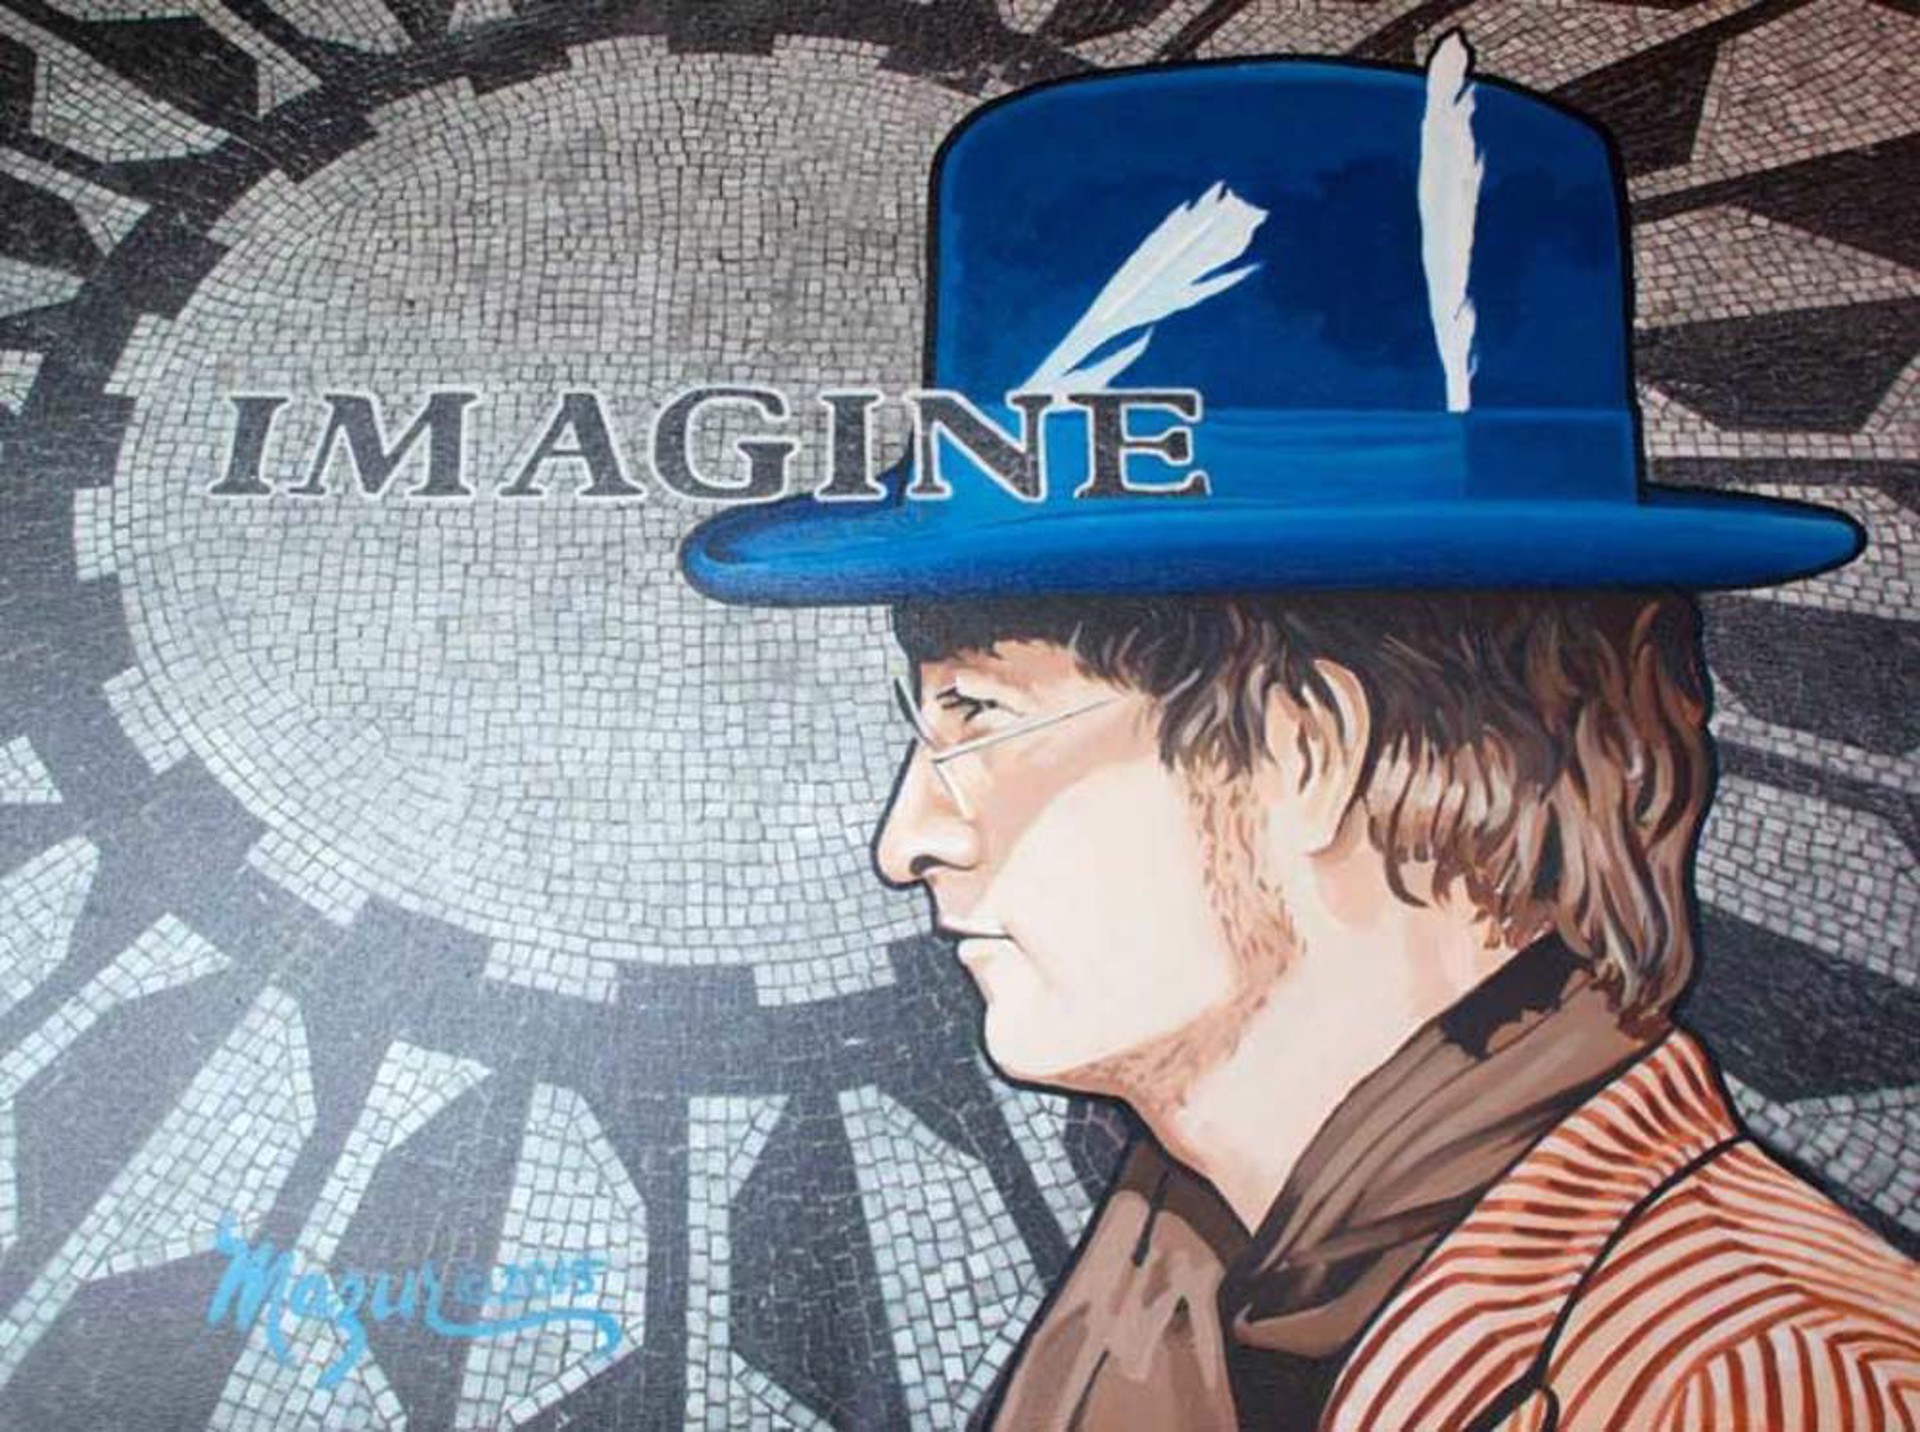 John Lennon "Imagine" by Ruby Mazur